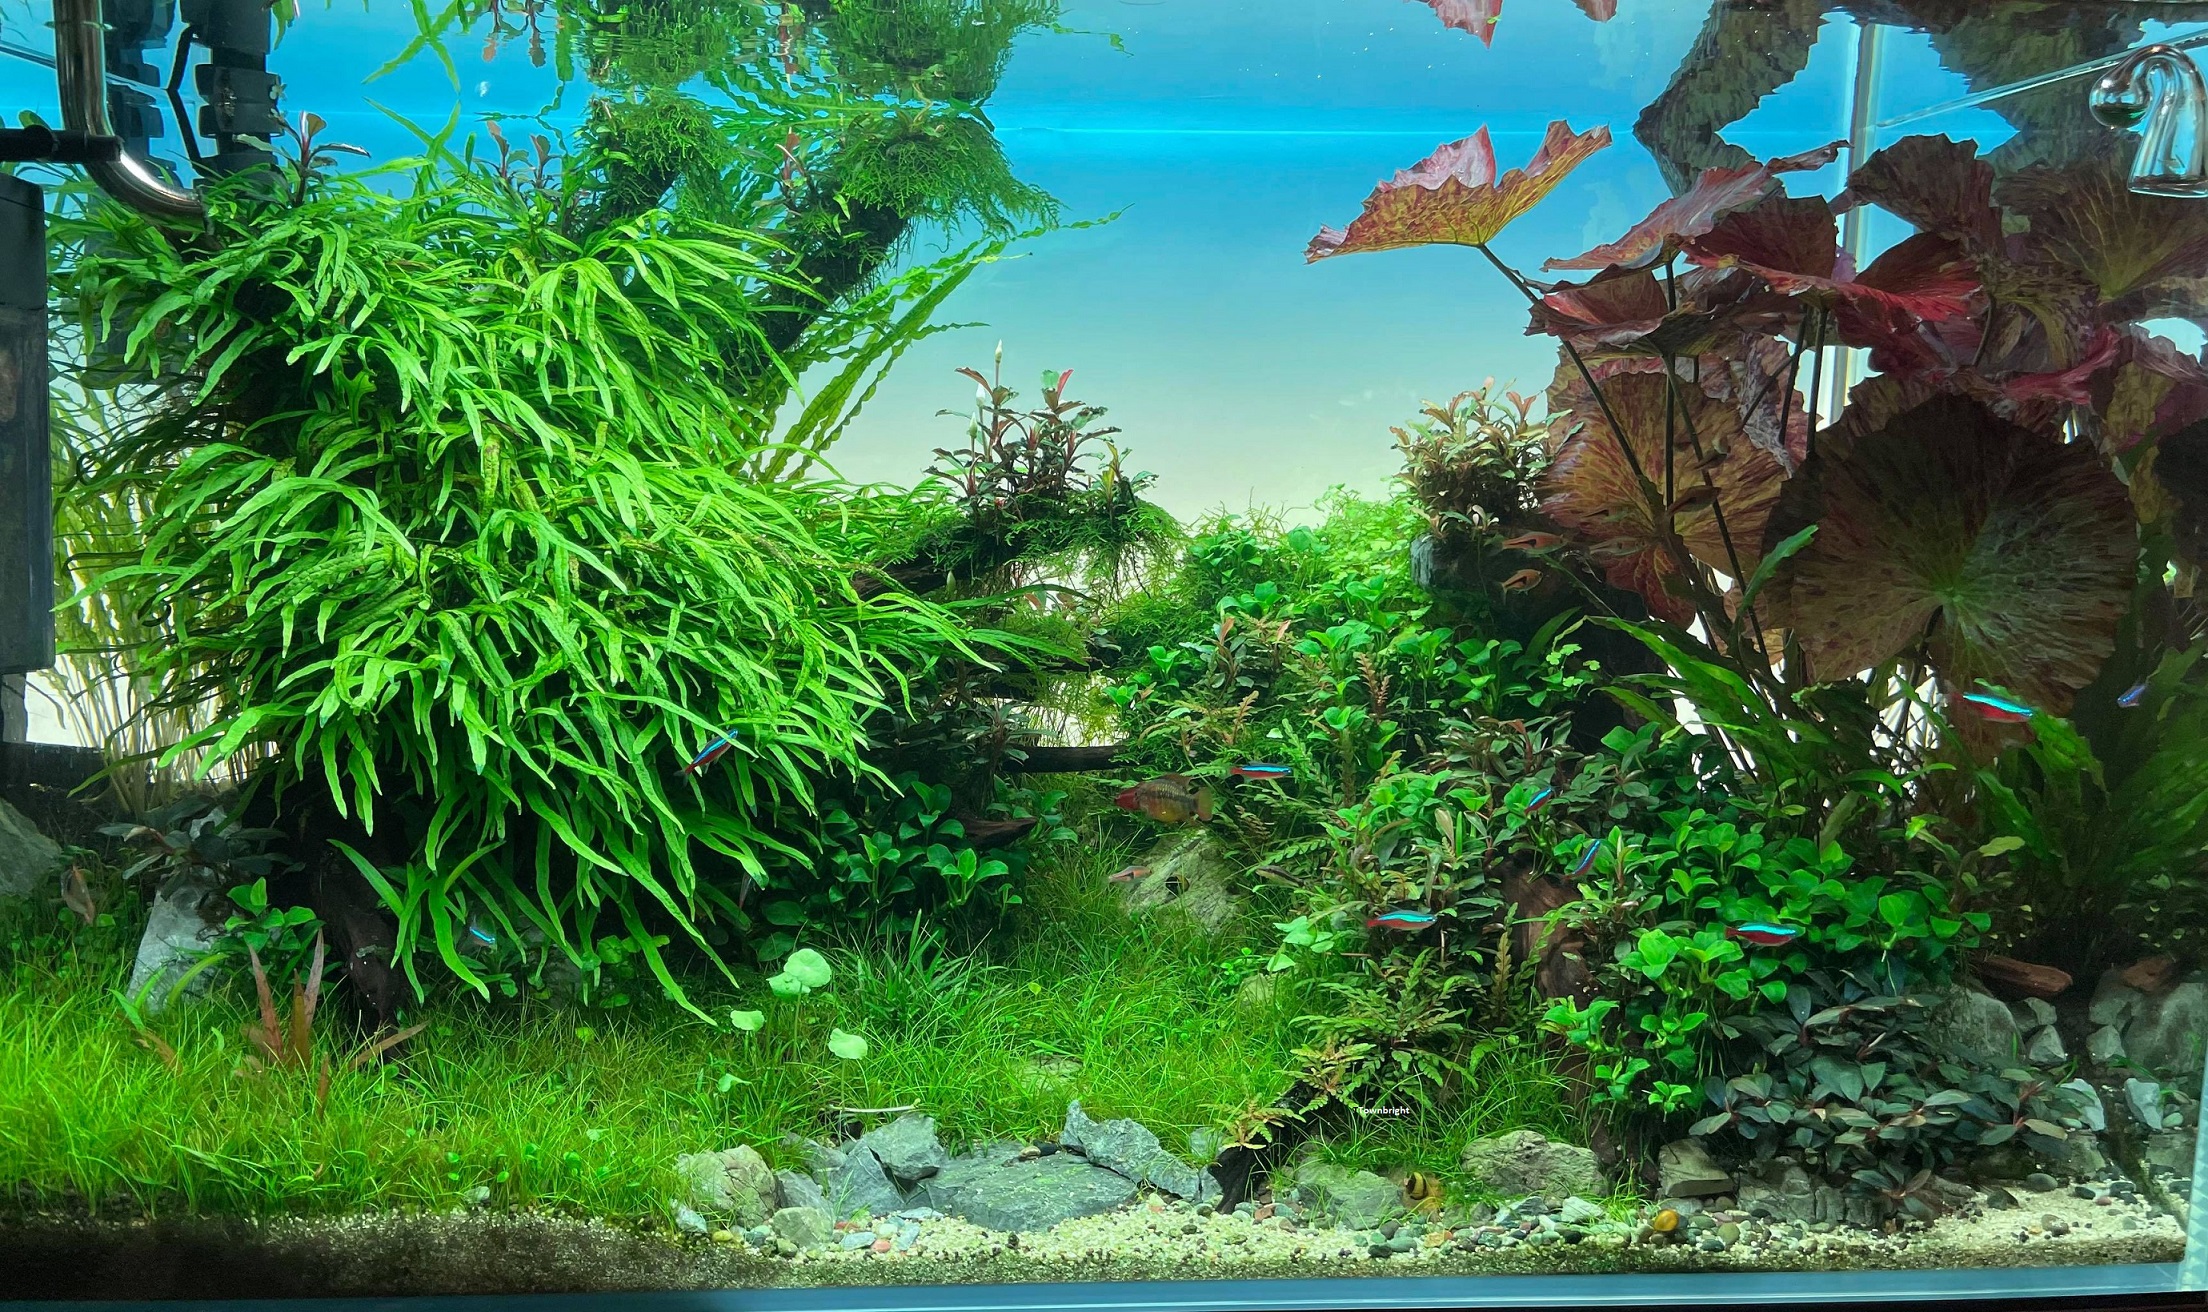 Fish Tank Background lightscreen, Competition Model - Townbright Aquatic  Equipment